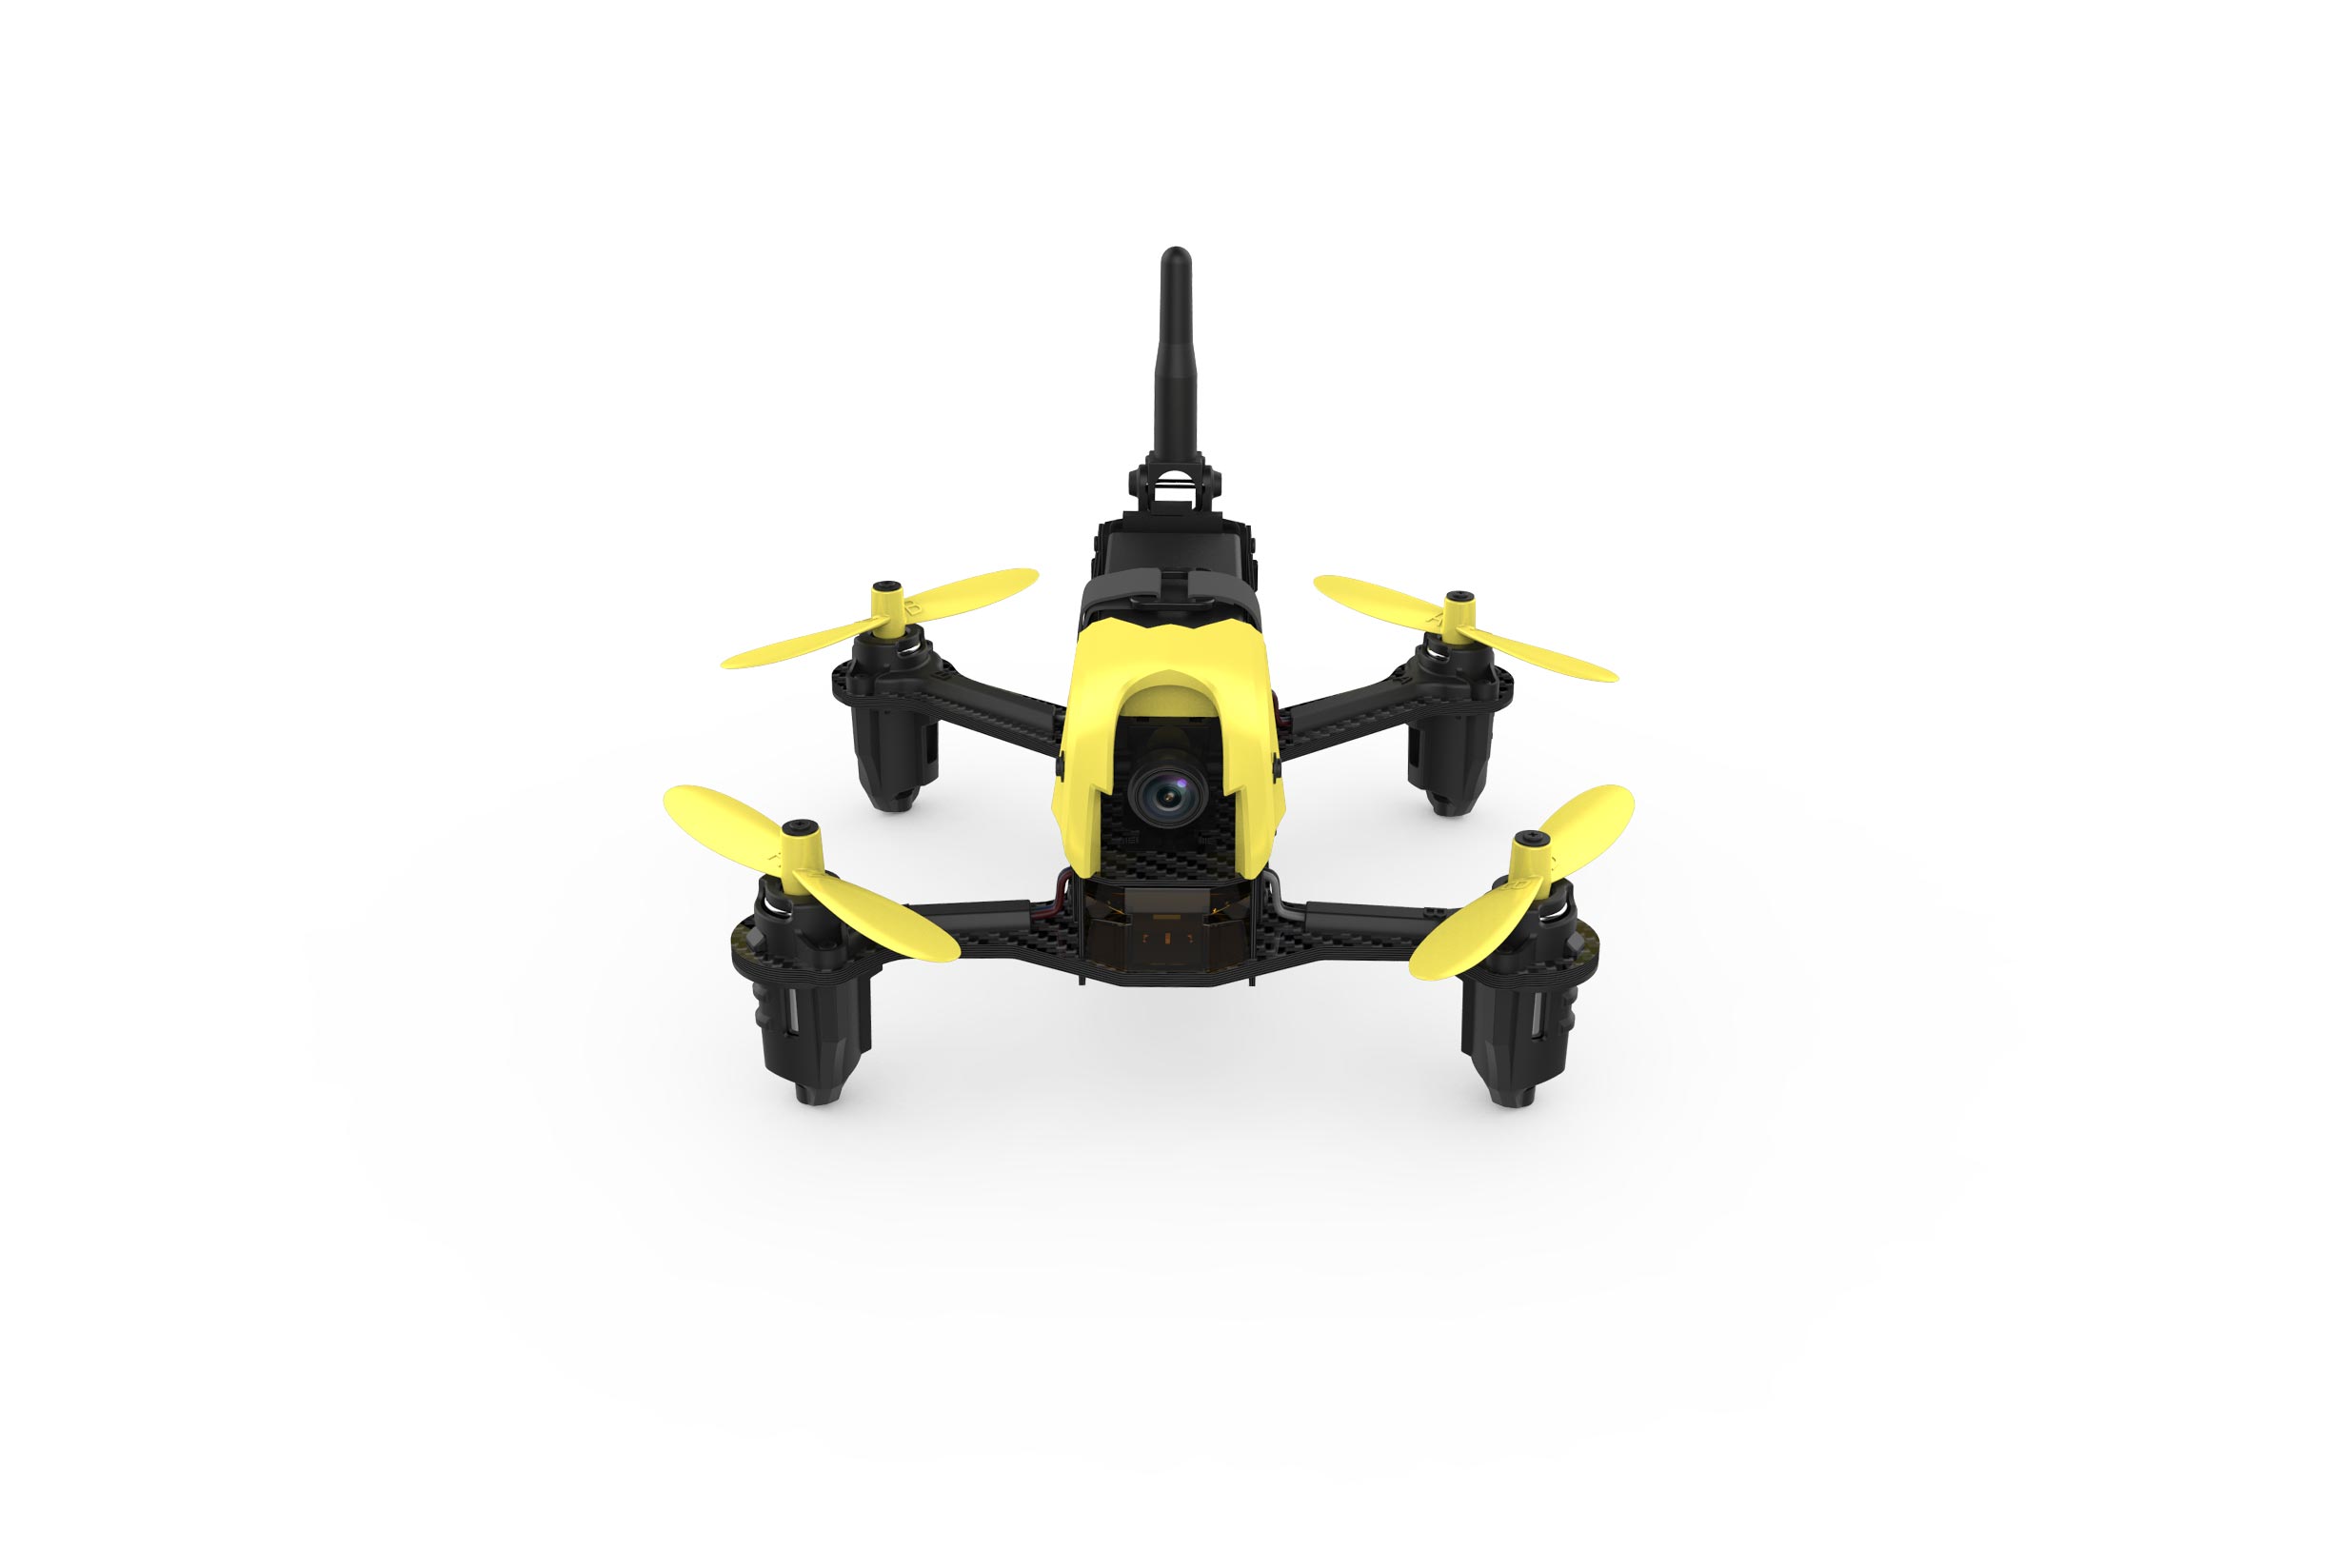 HUBSAN X4 H122D PRO FPV Storm Racing Drone W/ 720P HD Camera Goggles LCD Display 